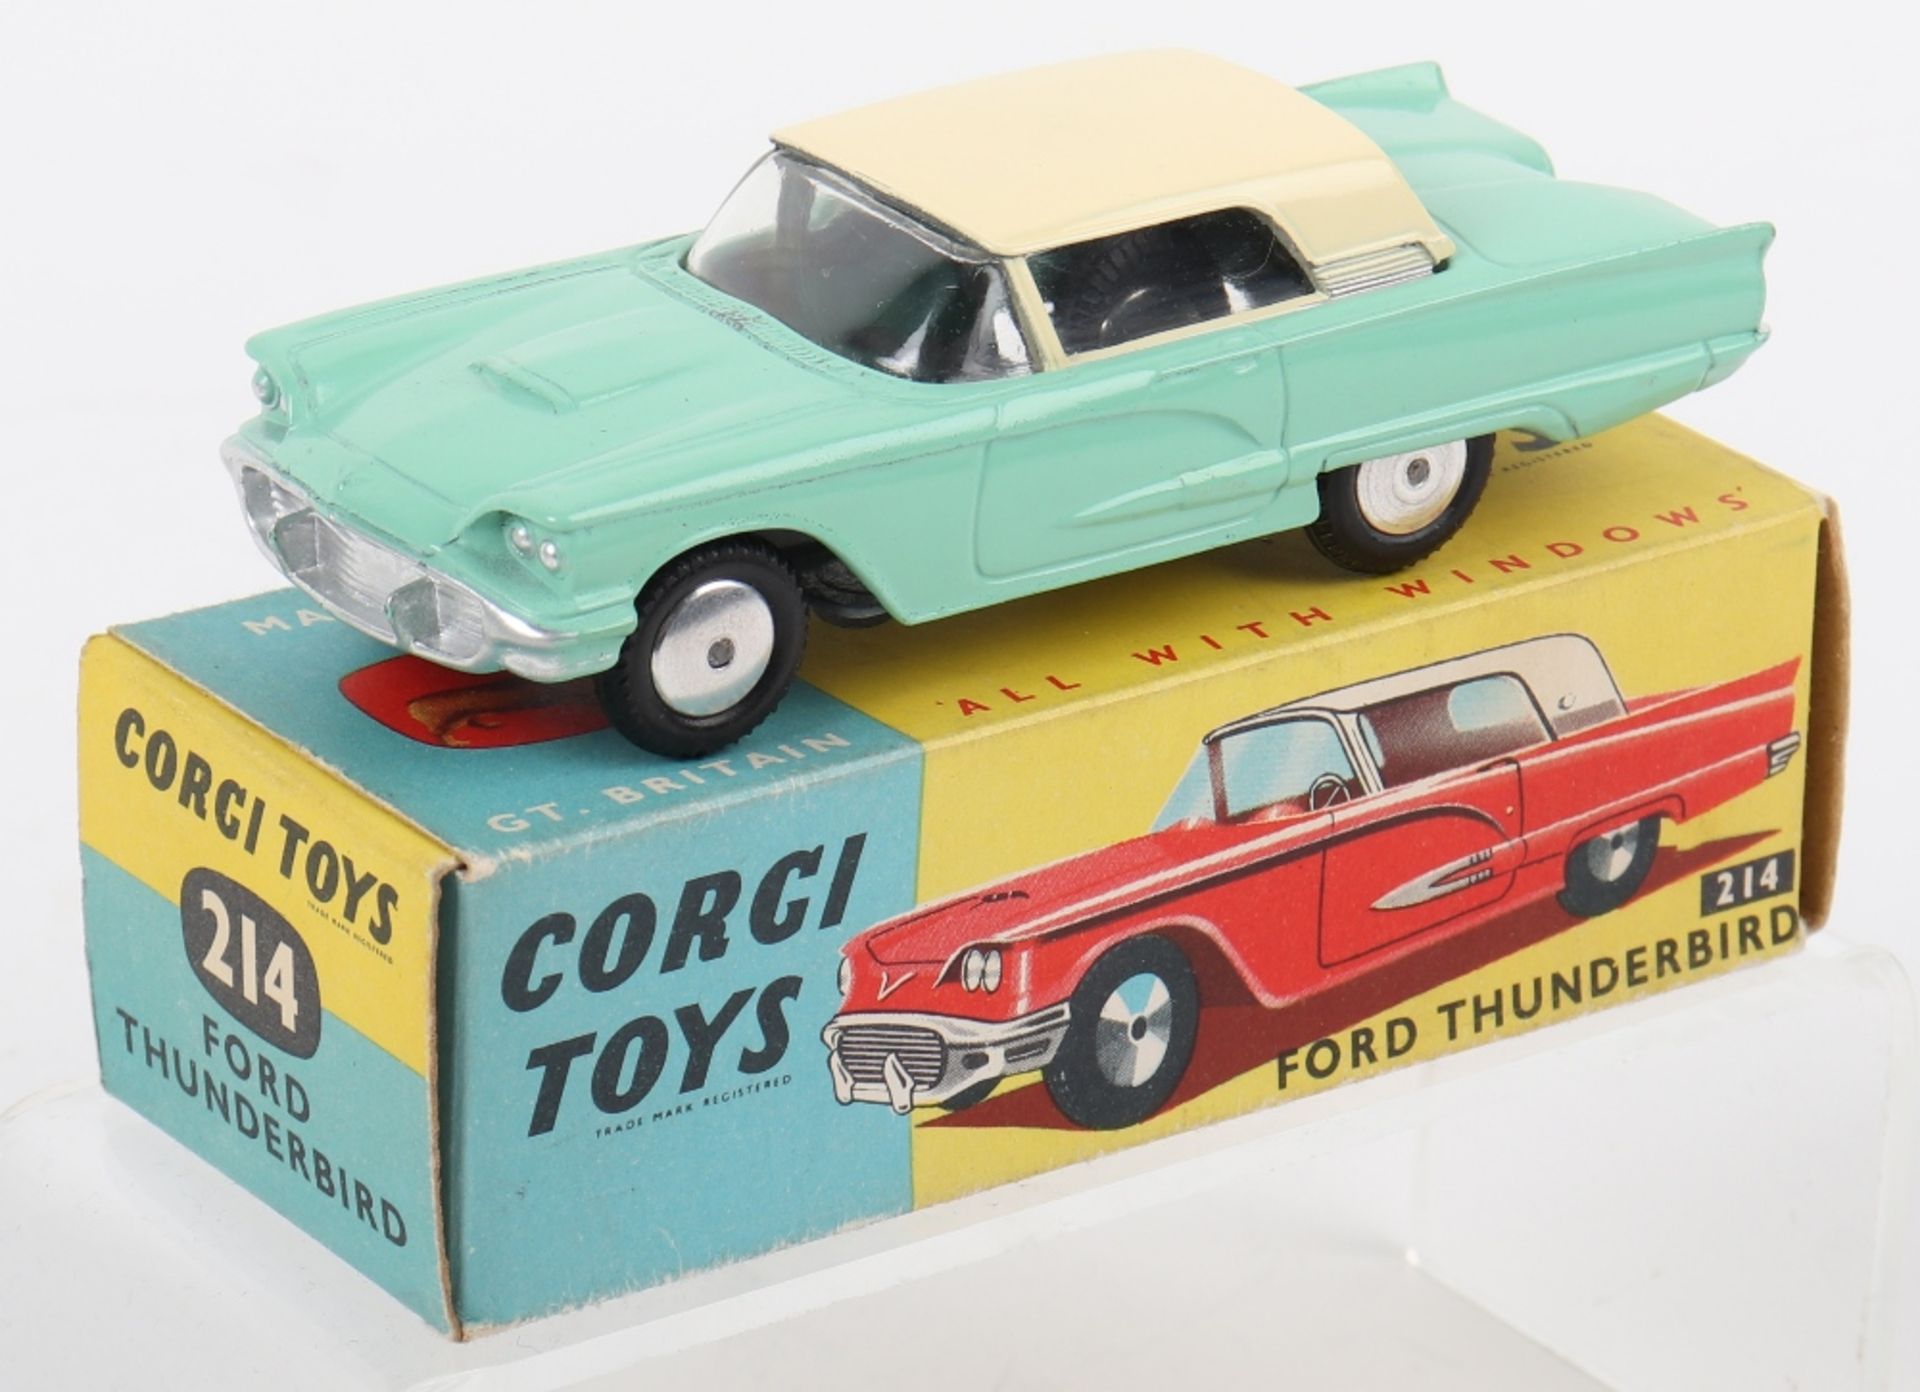 Corgi Toys 214 Ford Thunderbird